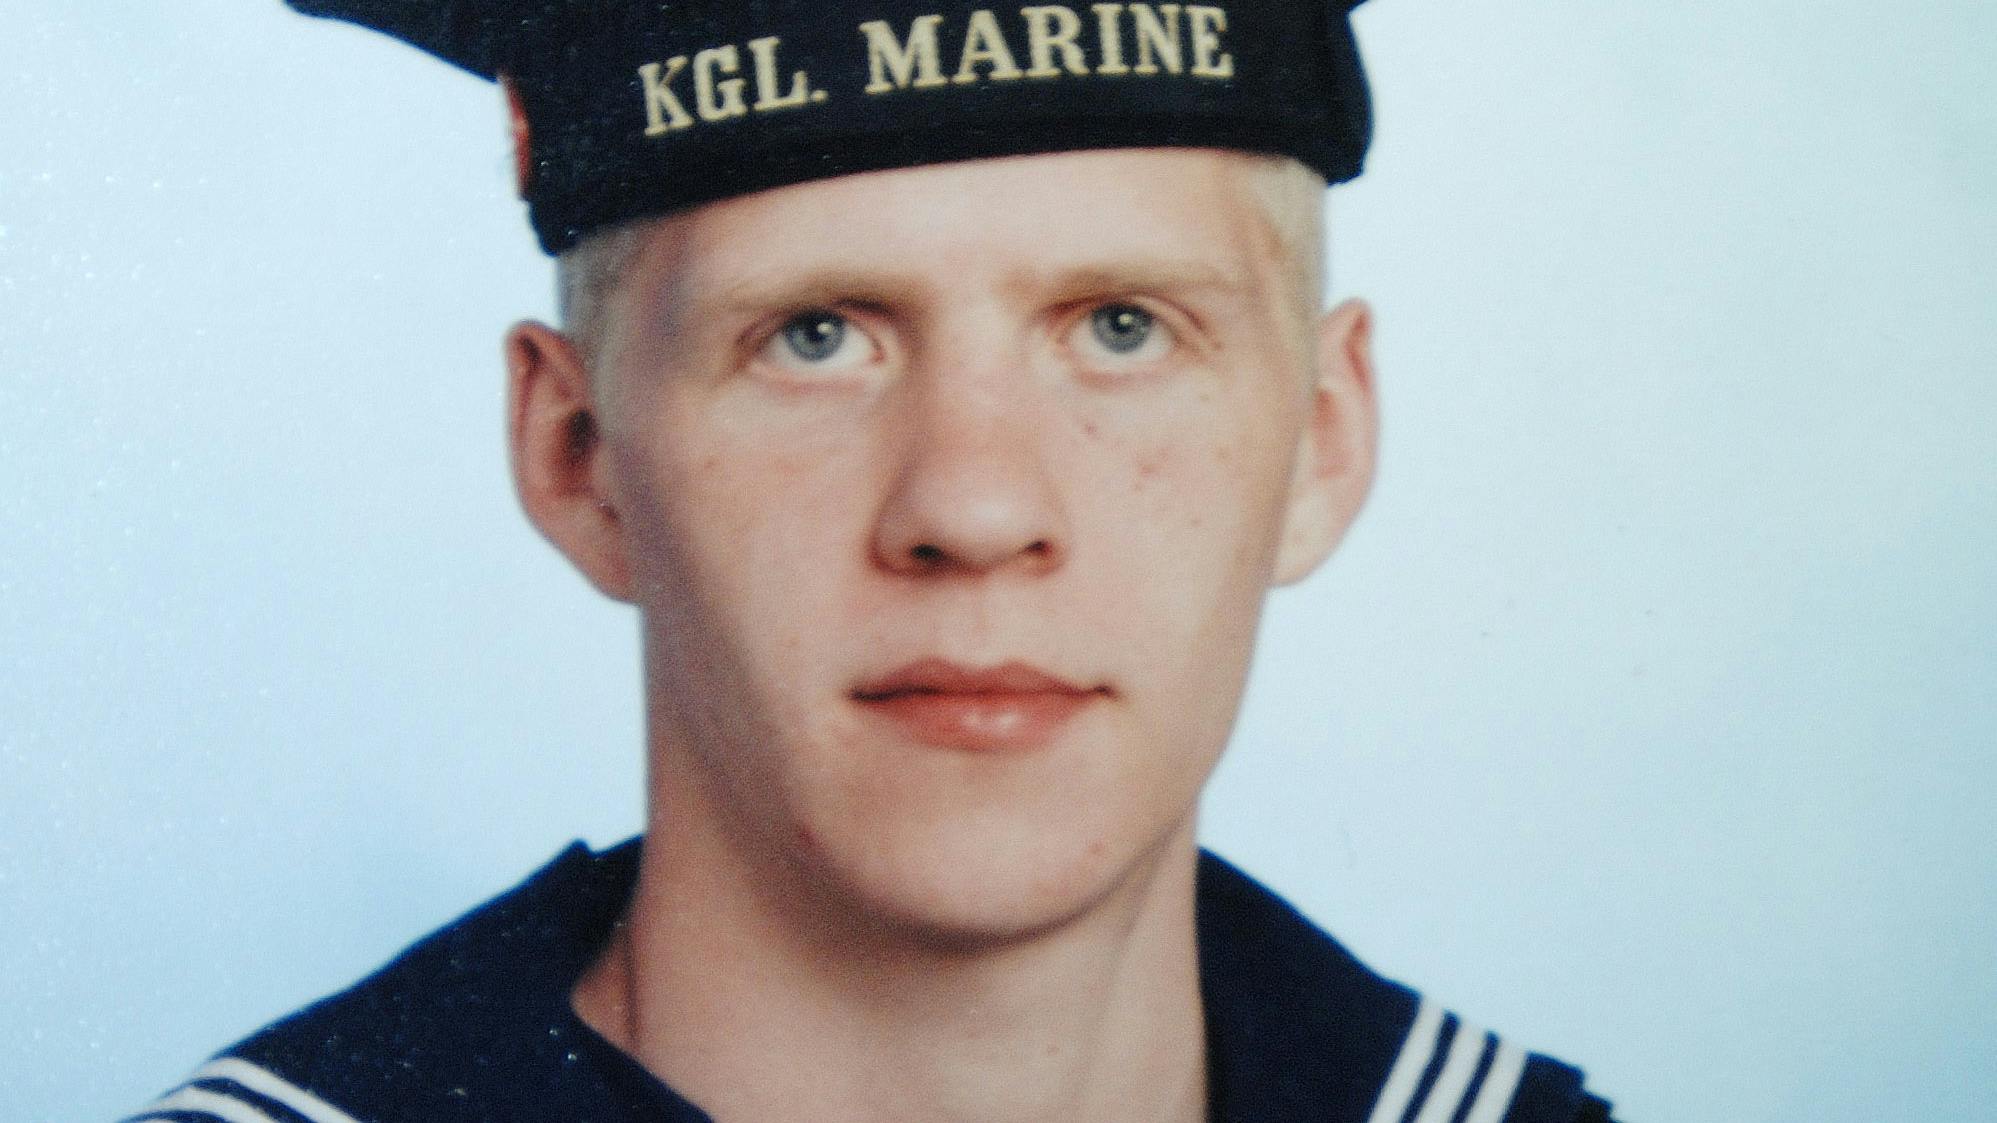 25-årige Jan Nordskov Larsen i uniform